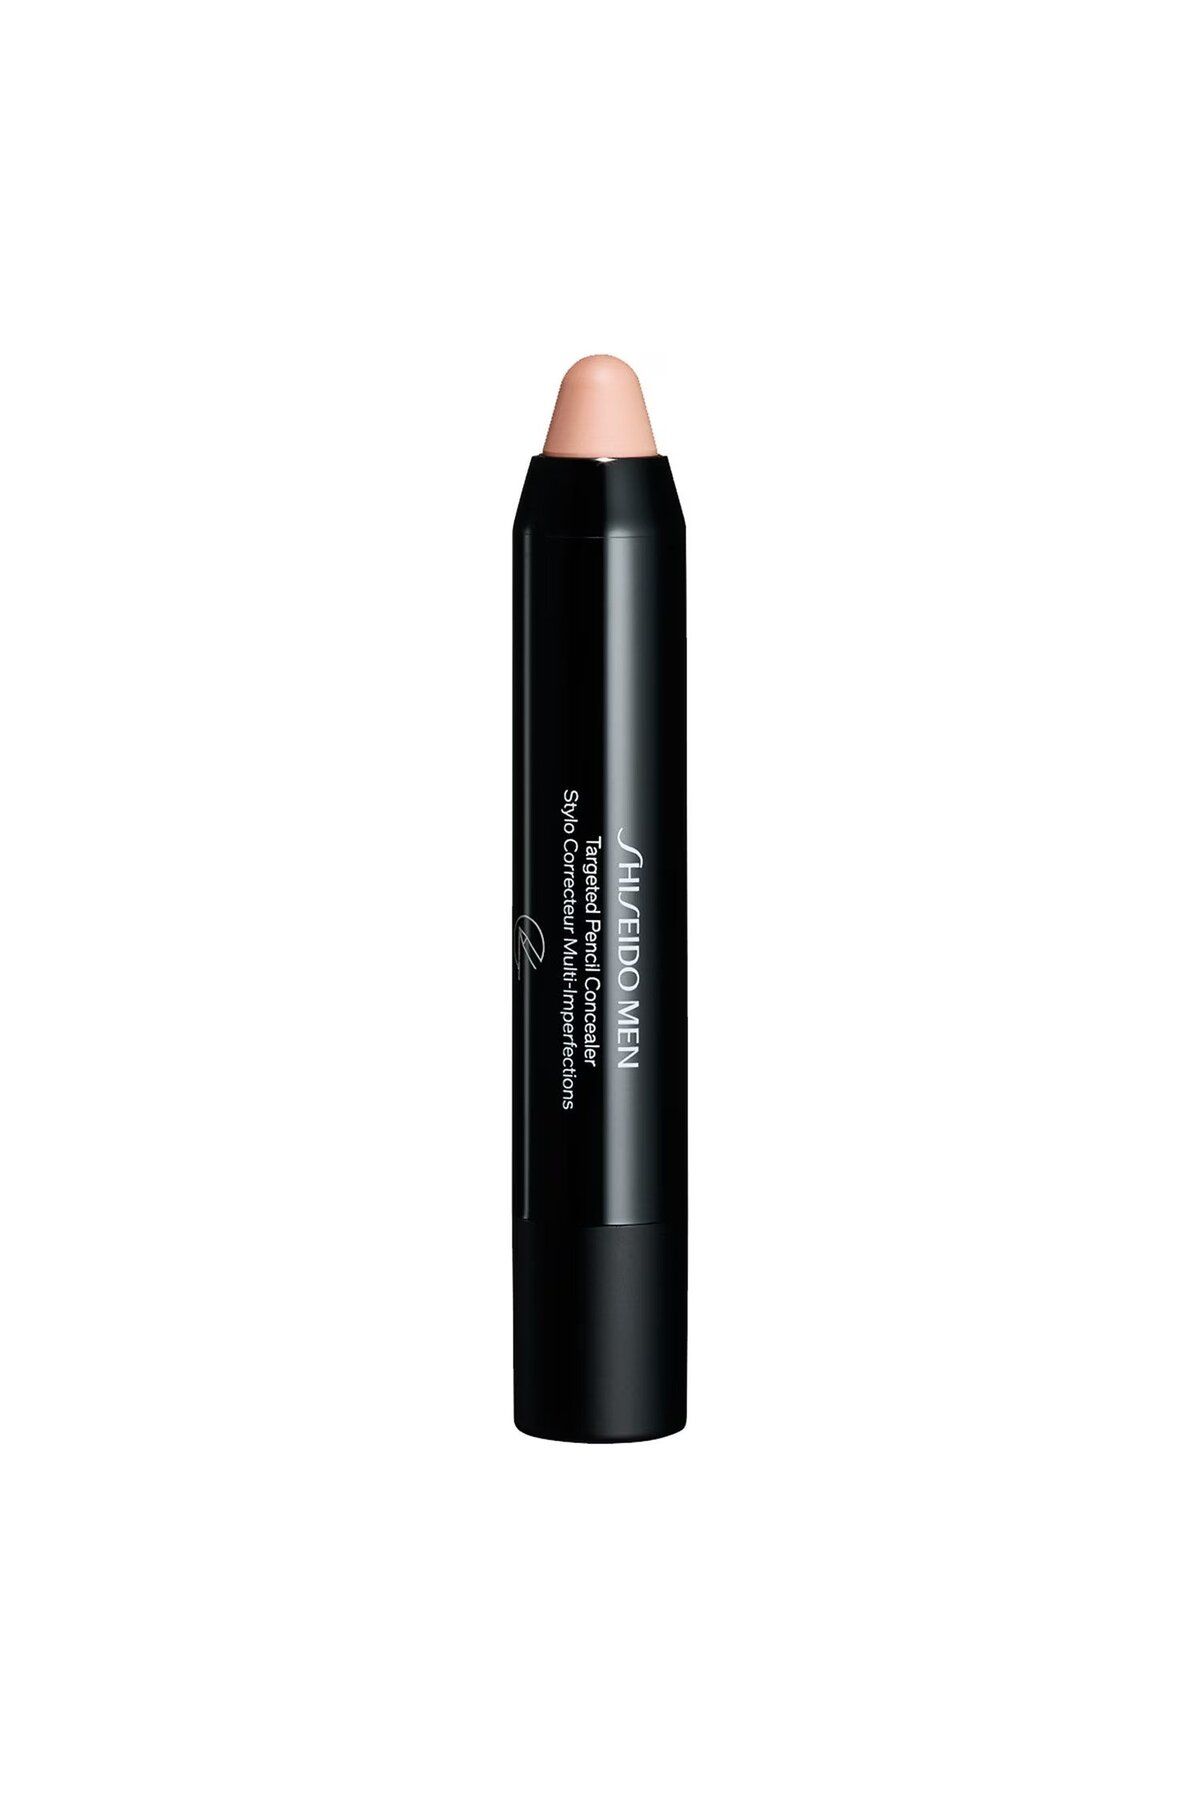 Shiseido مخفی کننده مدادی مردانه برای قرمزی پوست برای تنوع رنگ پوست نامنظم 30 گرم